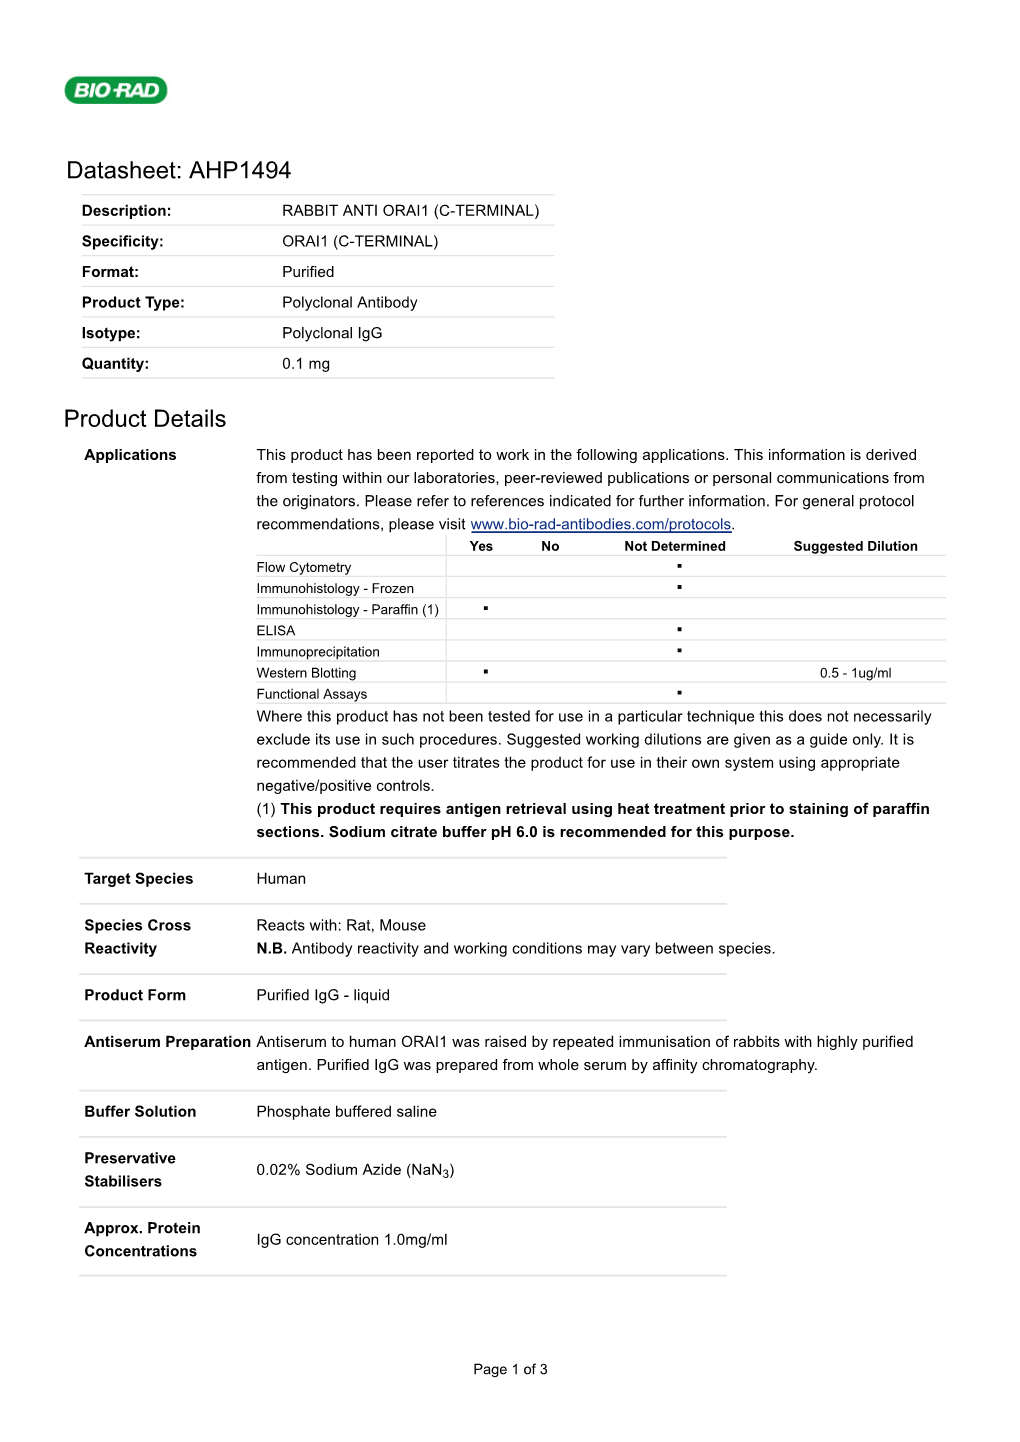 Datasheet: AHP1494 Product Details